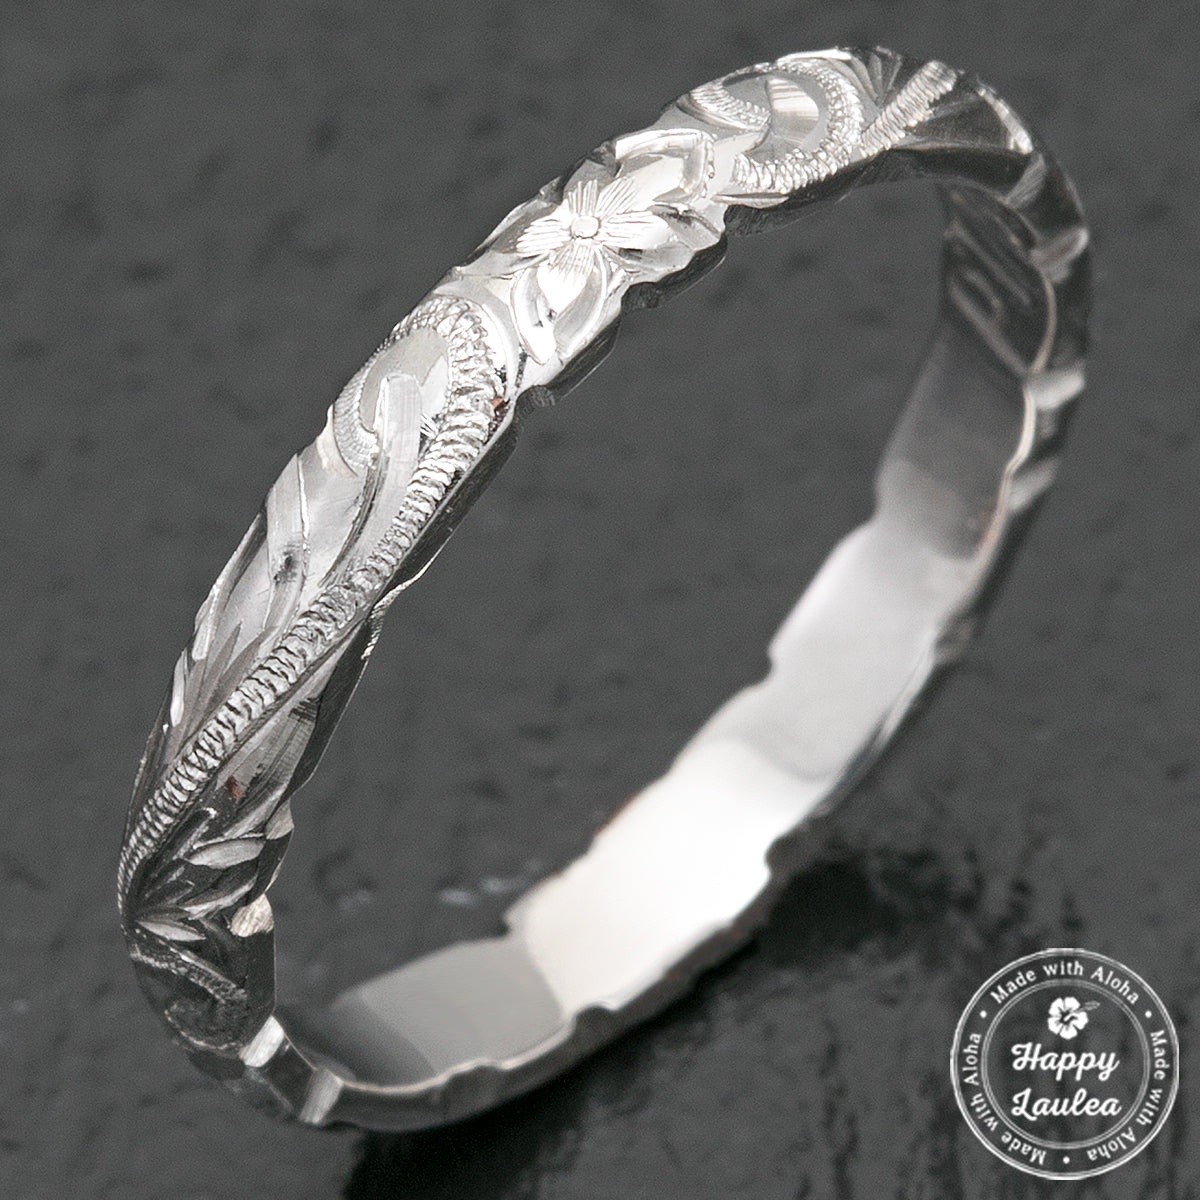 Pair of Platinum & Sterling Silver Koa Wood Hawaiian Jewelry Rings - 3&8mm, Dome Shape